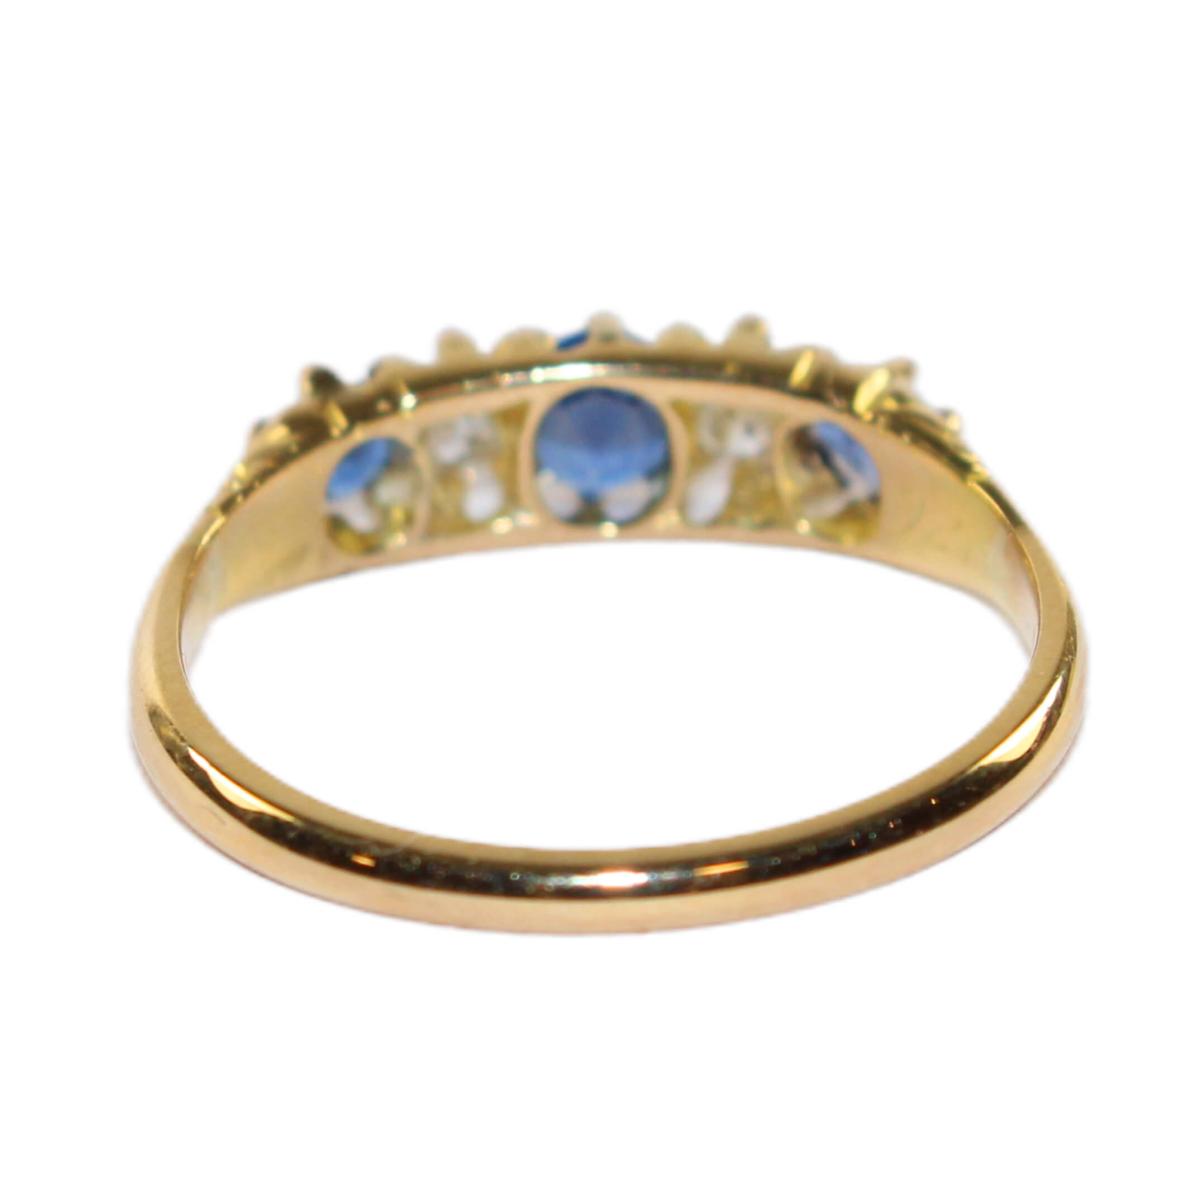 Edwardian Sapphire and Diamond 5 Stone Ring circa 1910